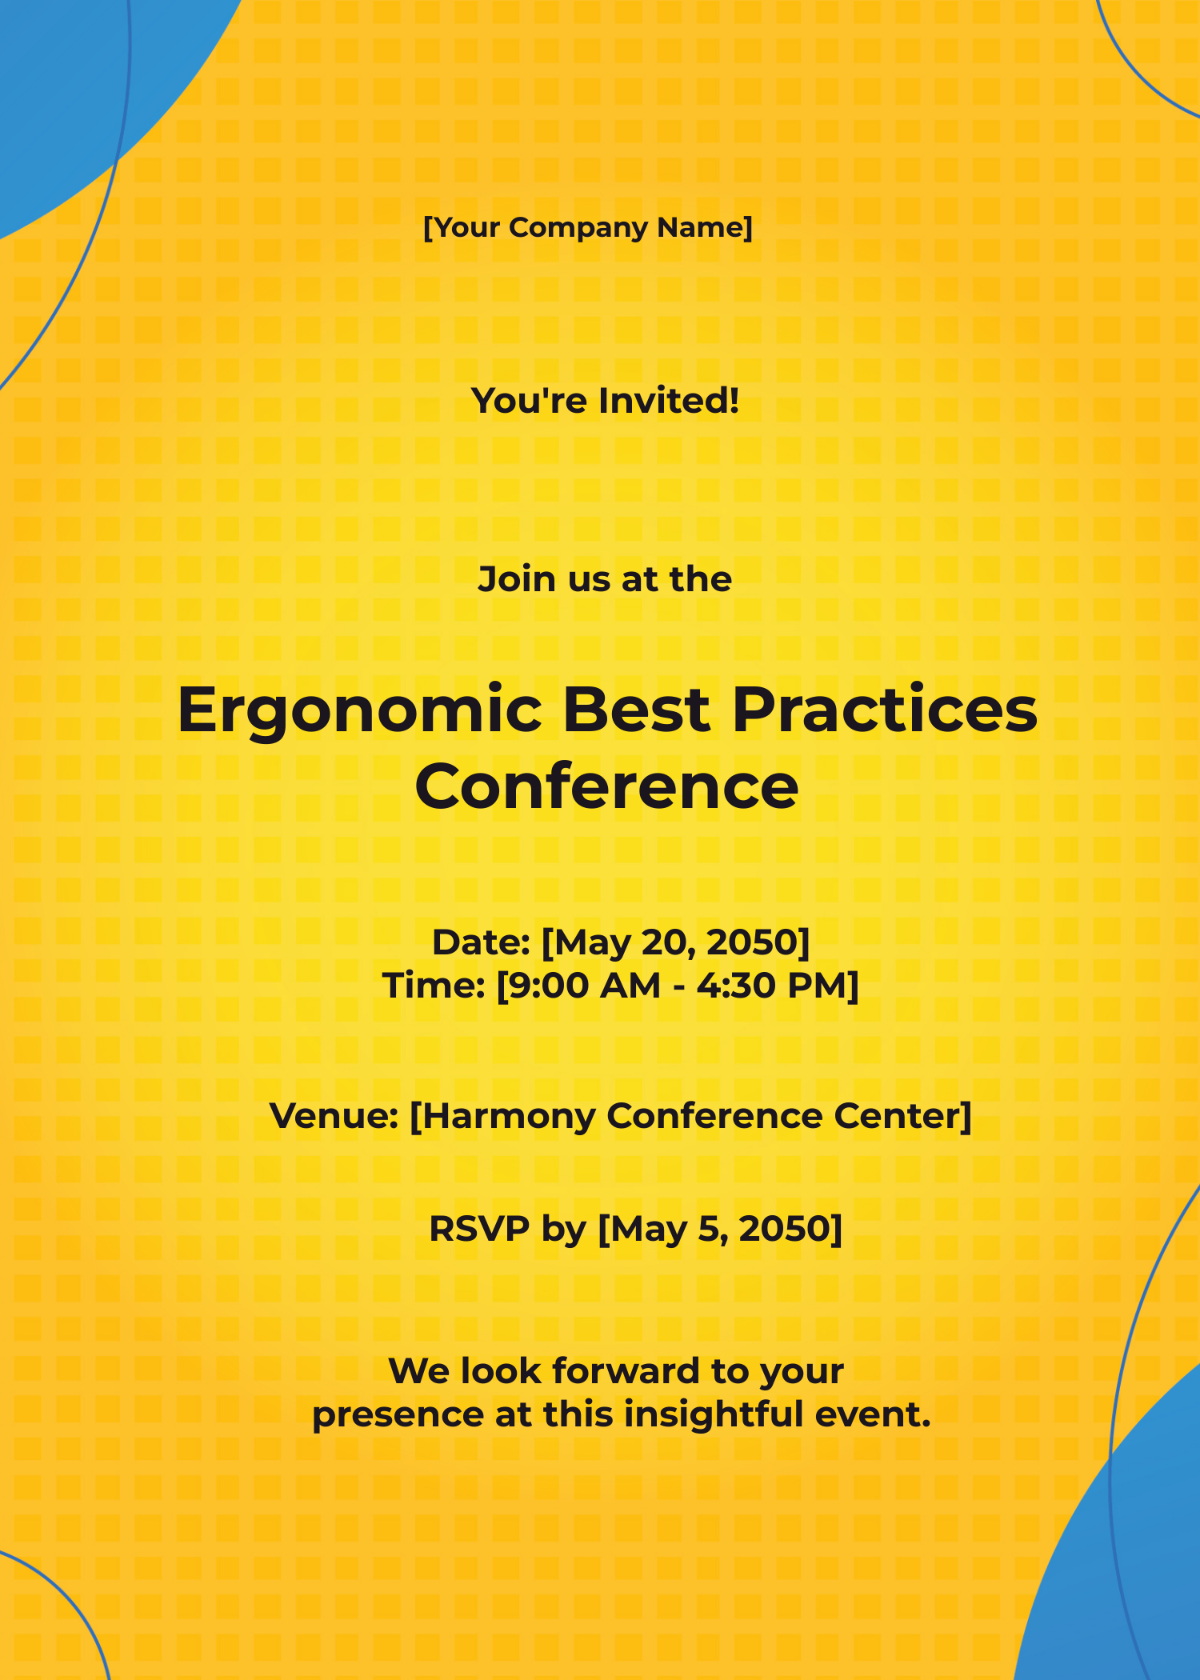 Ergonomic Best Practices Conference Invitation Card